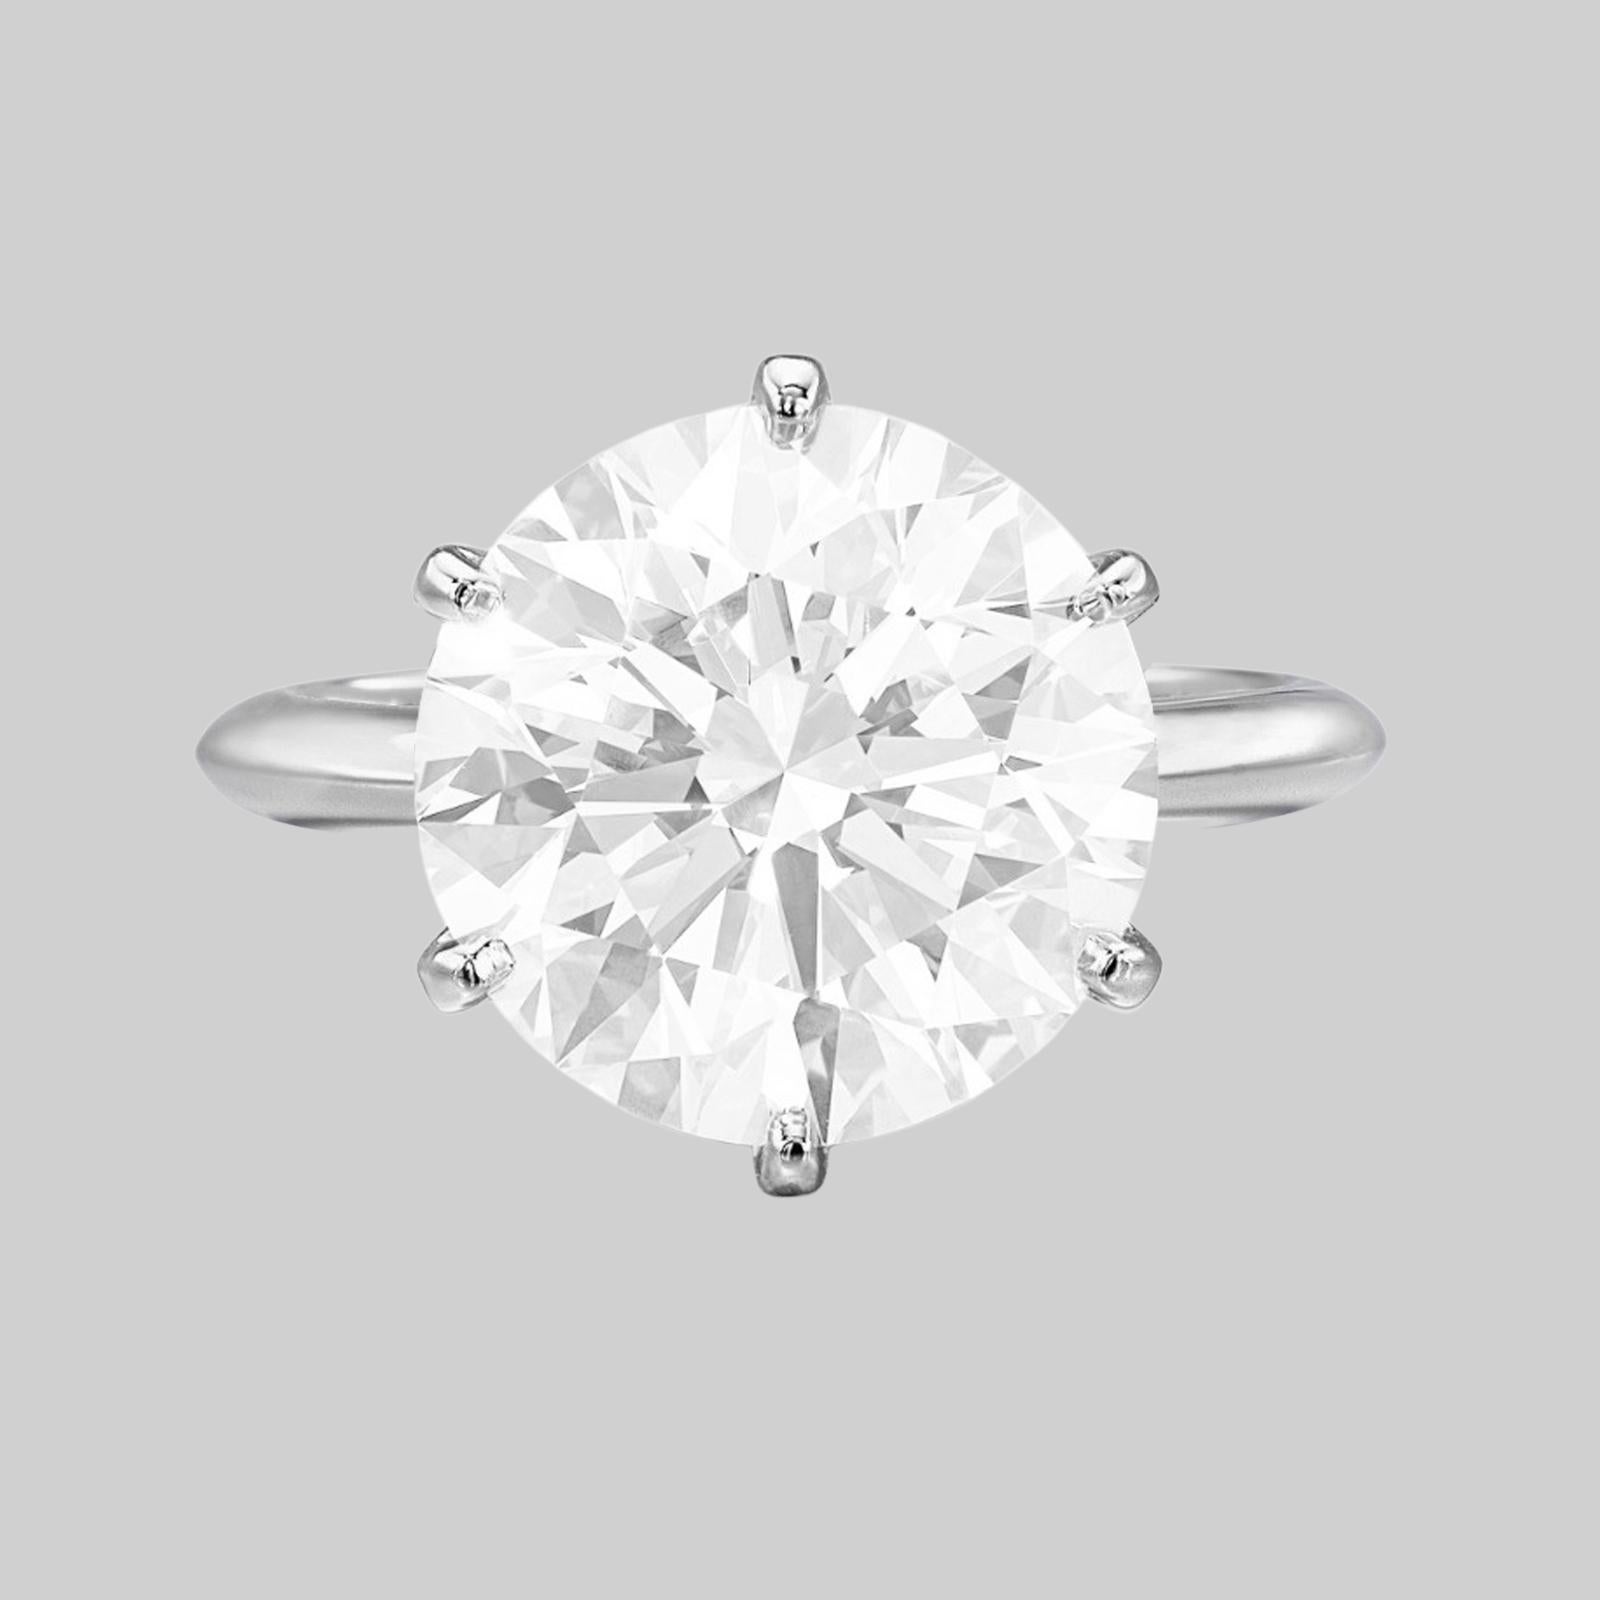 4.5 carat round diamond ring